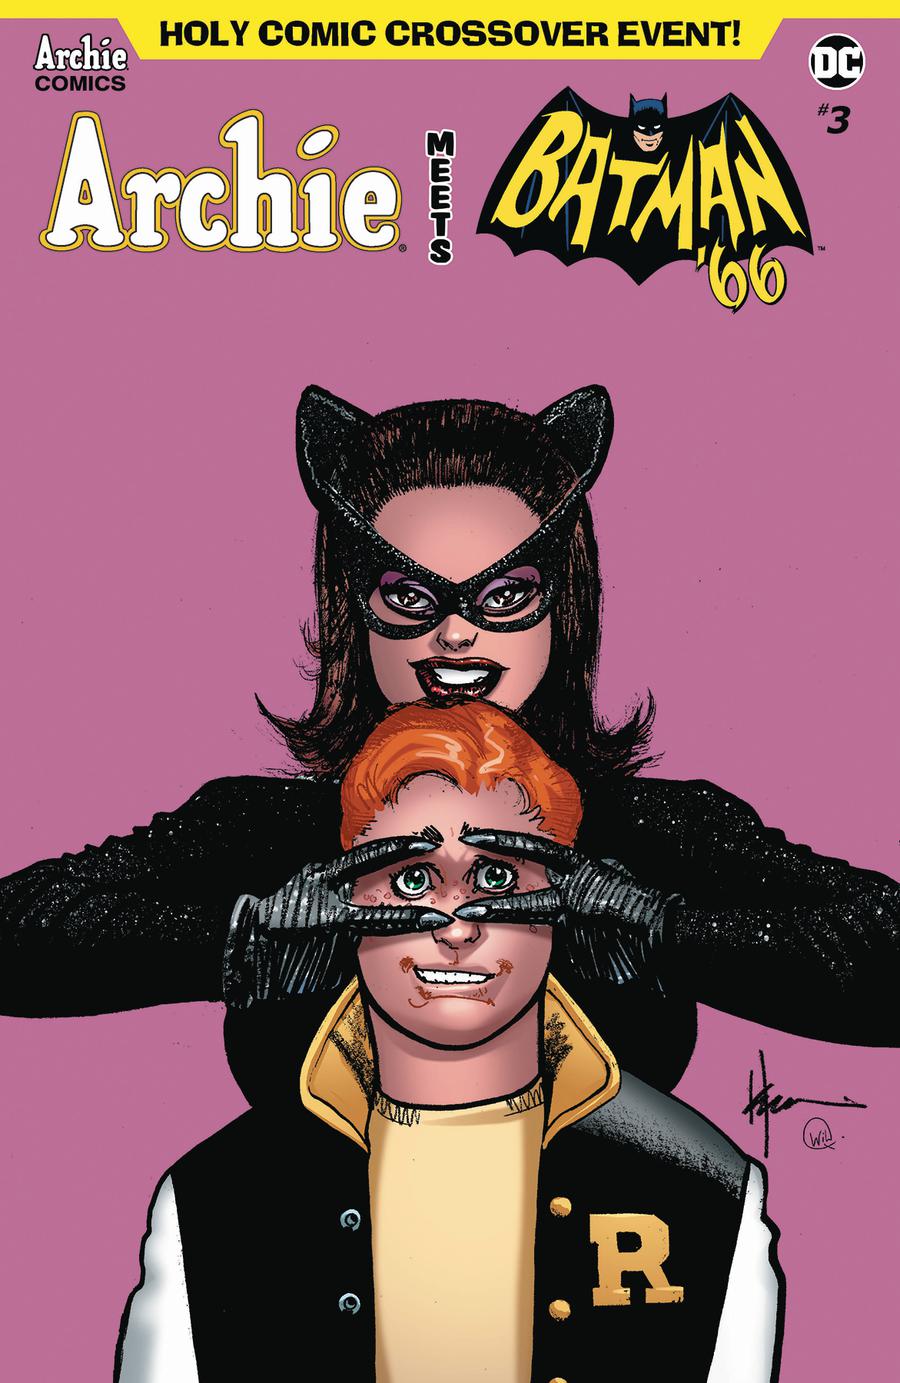 Archie Meets Batman 66 #3 Cover C Variant Howard Chaykin Cover